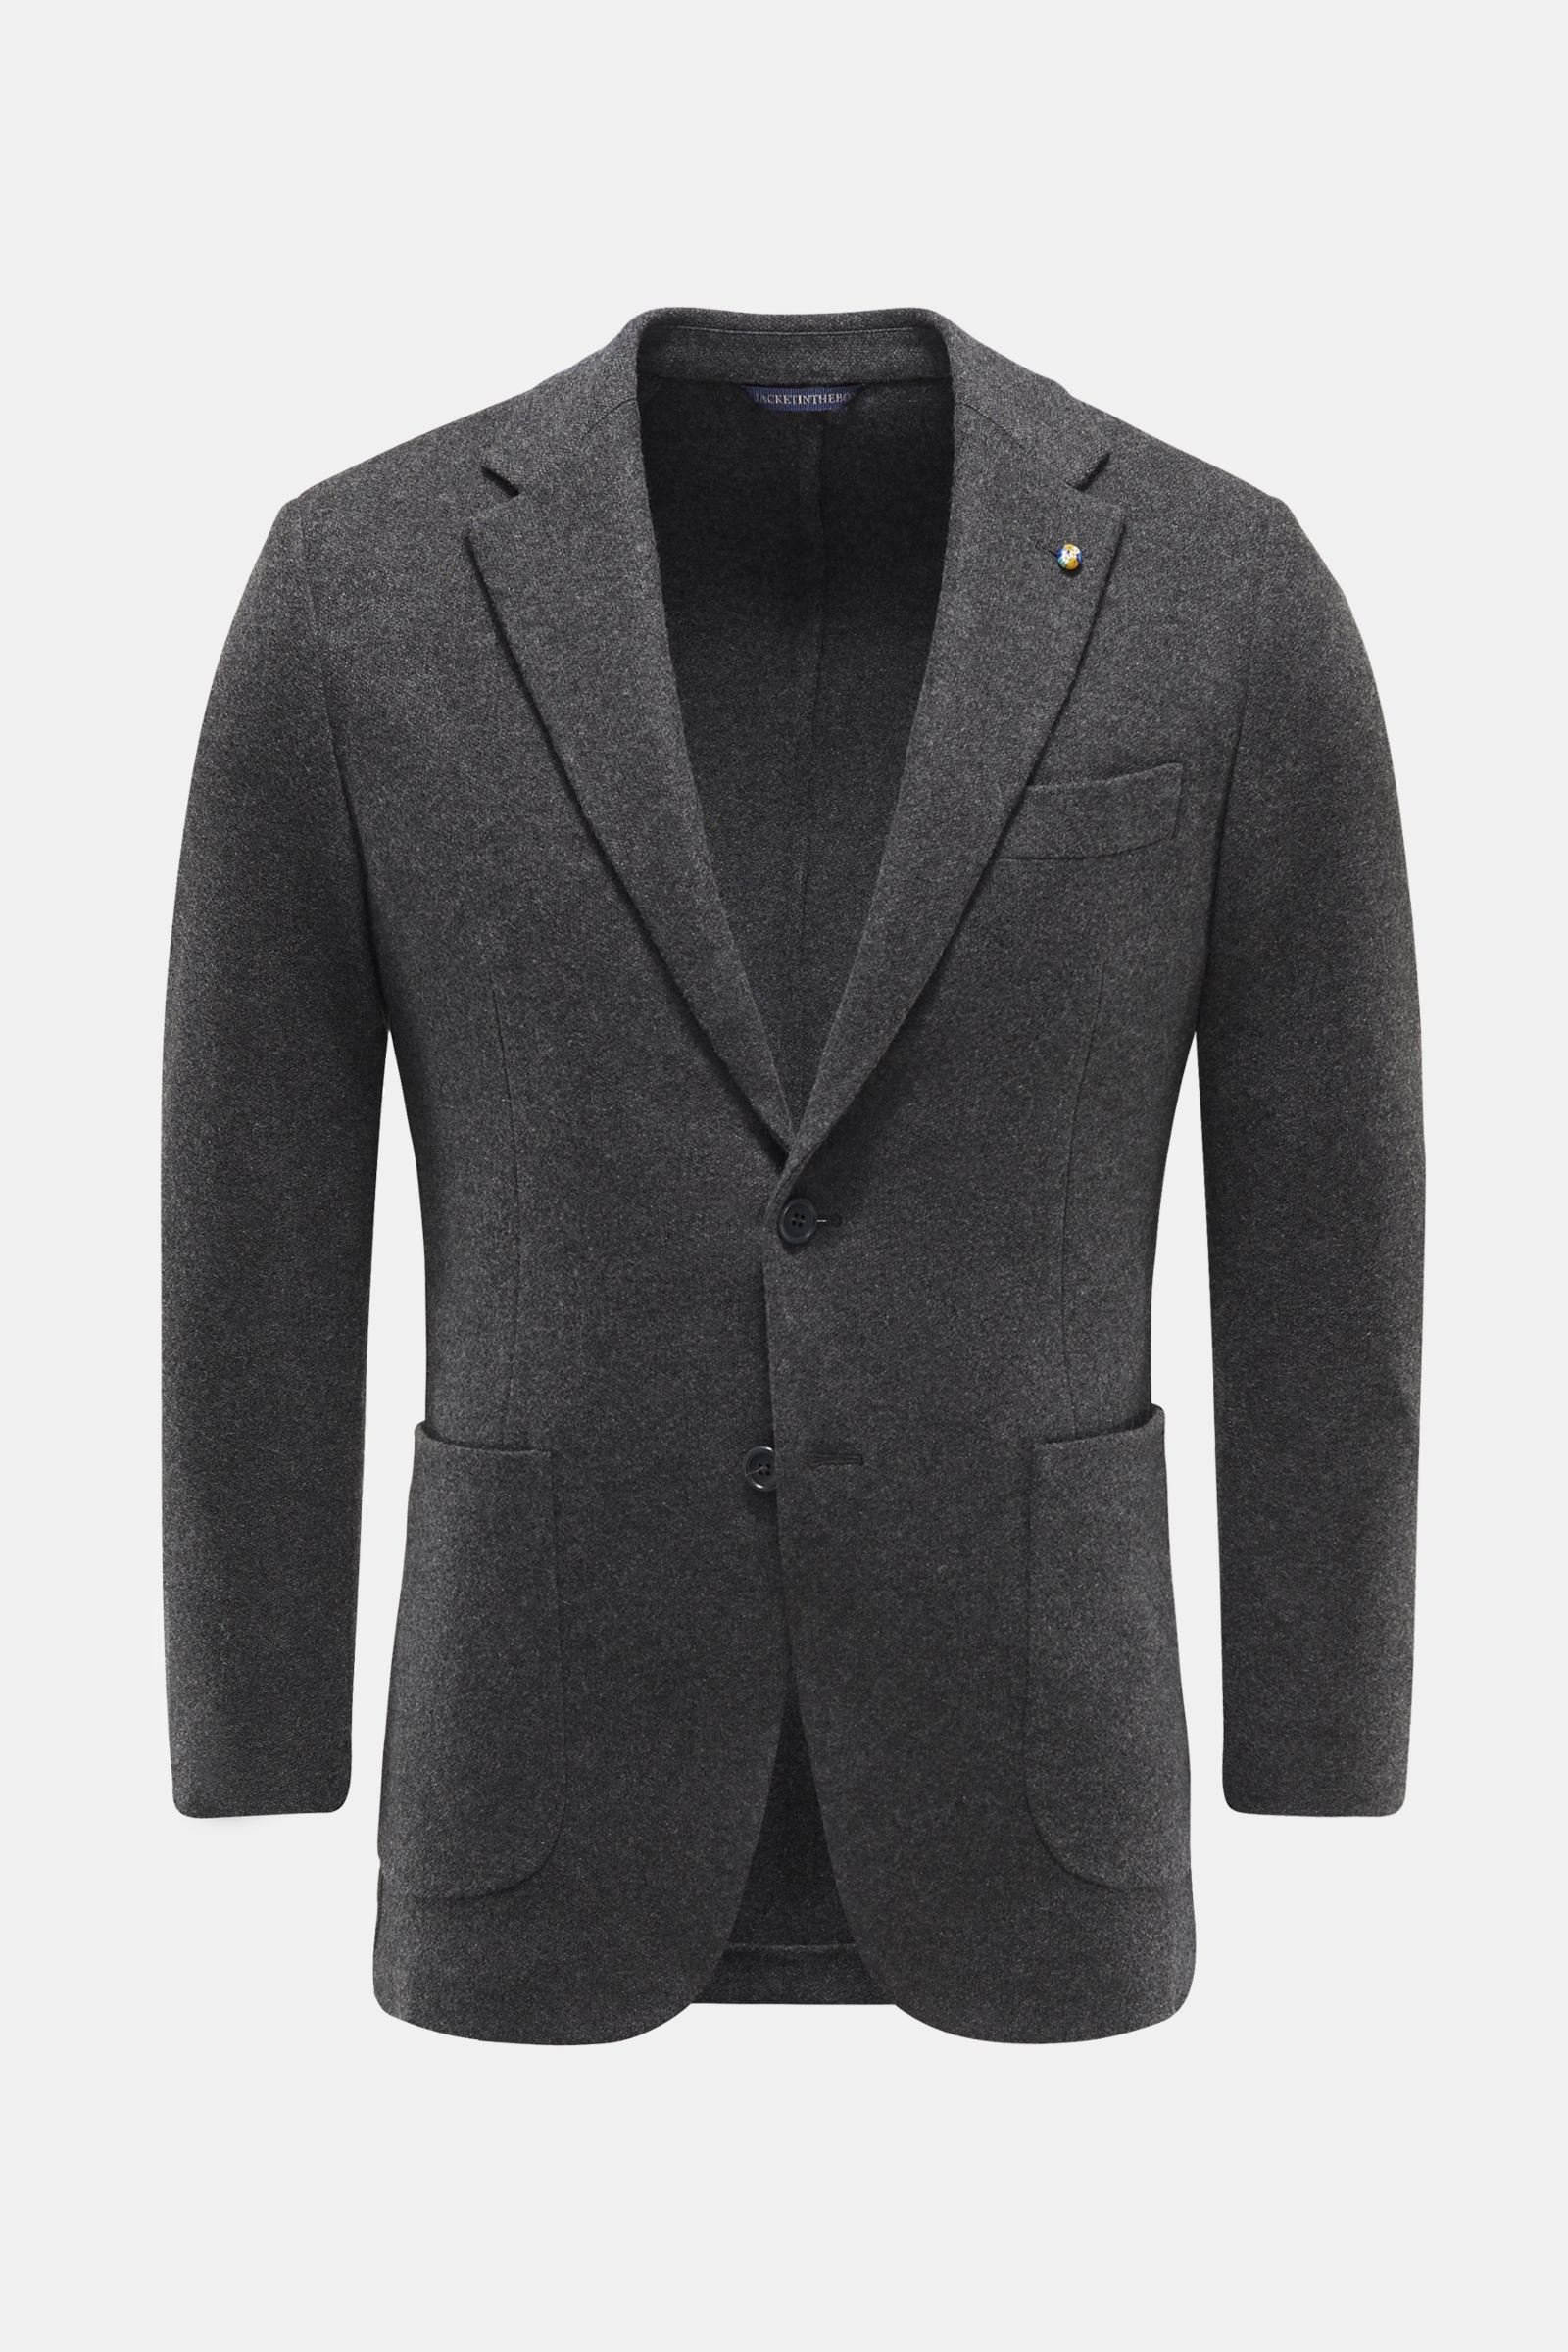 Cashmere knit blazer dark grey